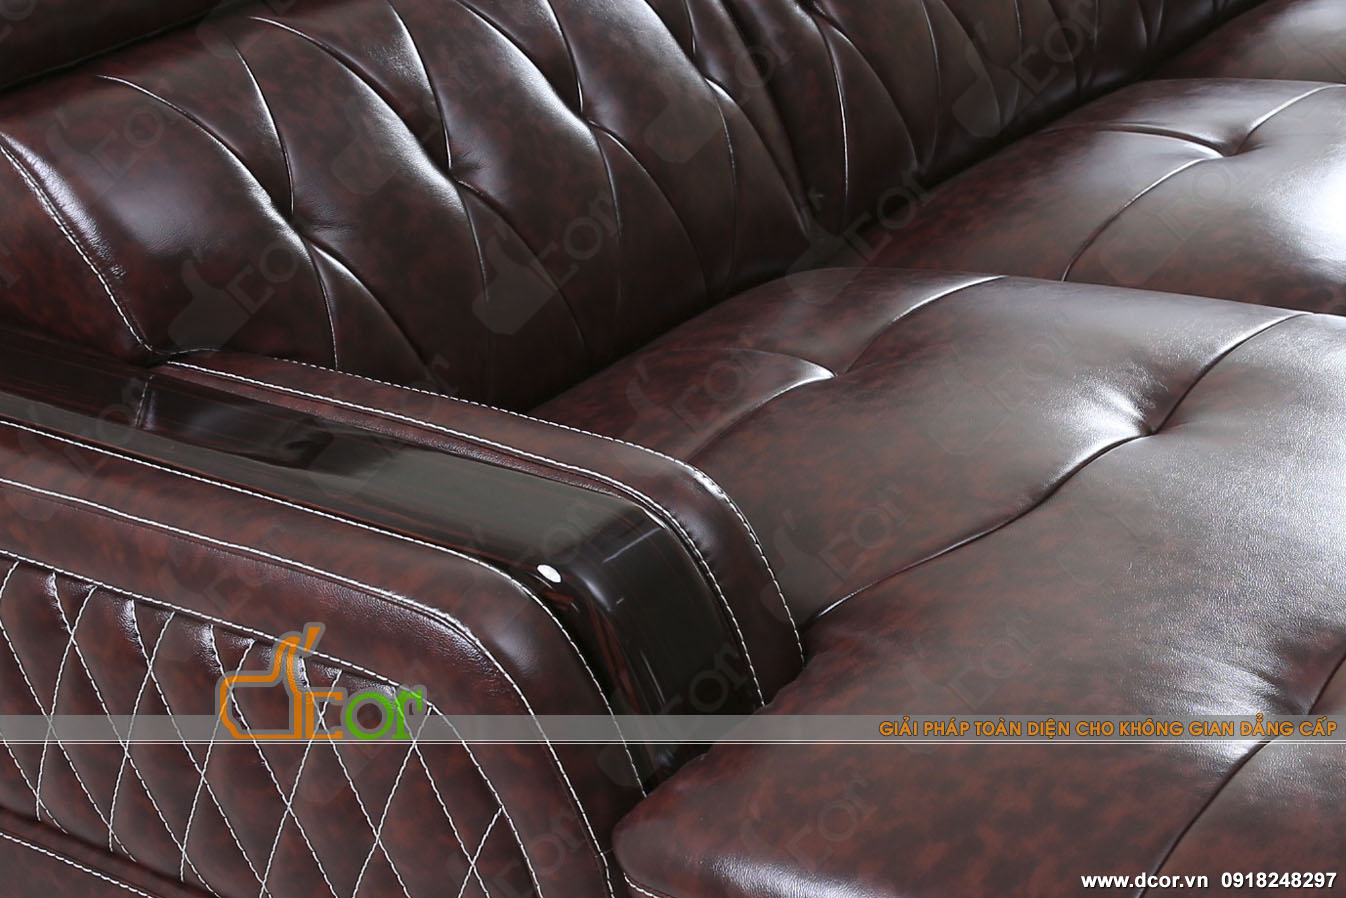 Mẫu sofa da cao cấp DG504 nhập khẩu đẹp đến từng chi tiết > mau-sofa-nhap-khau-dep-den-tung-chi-tiet